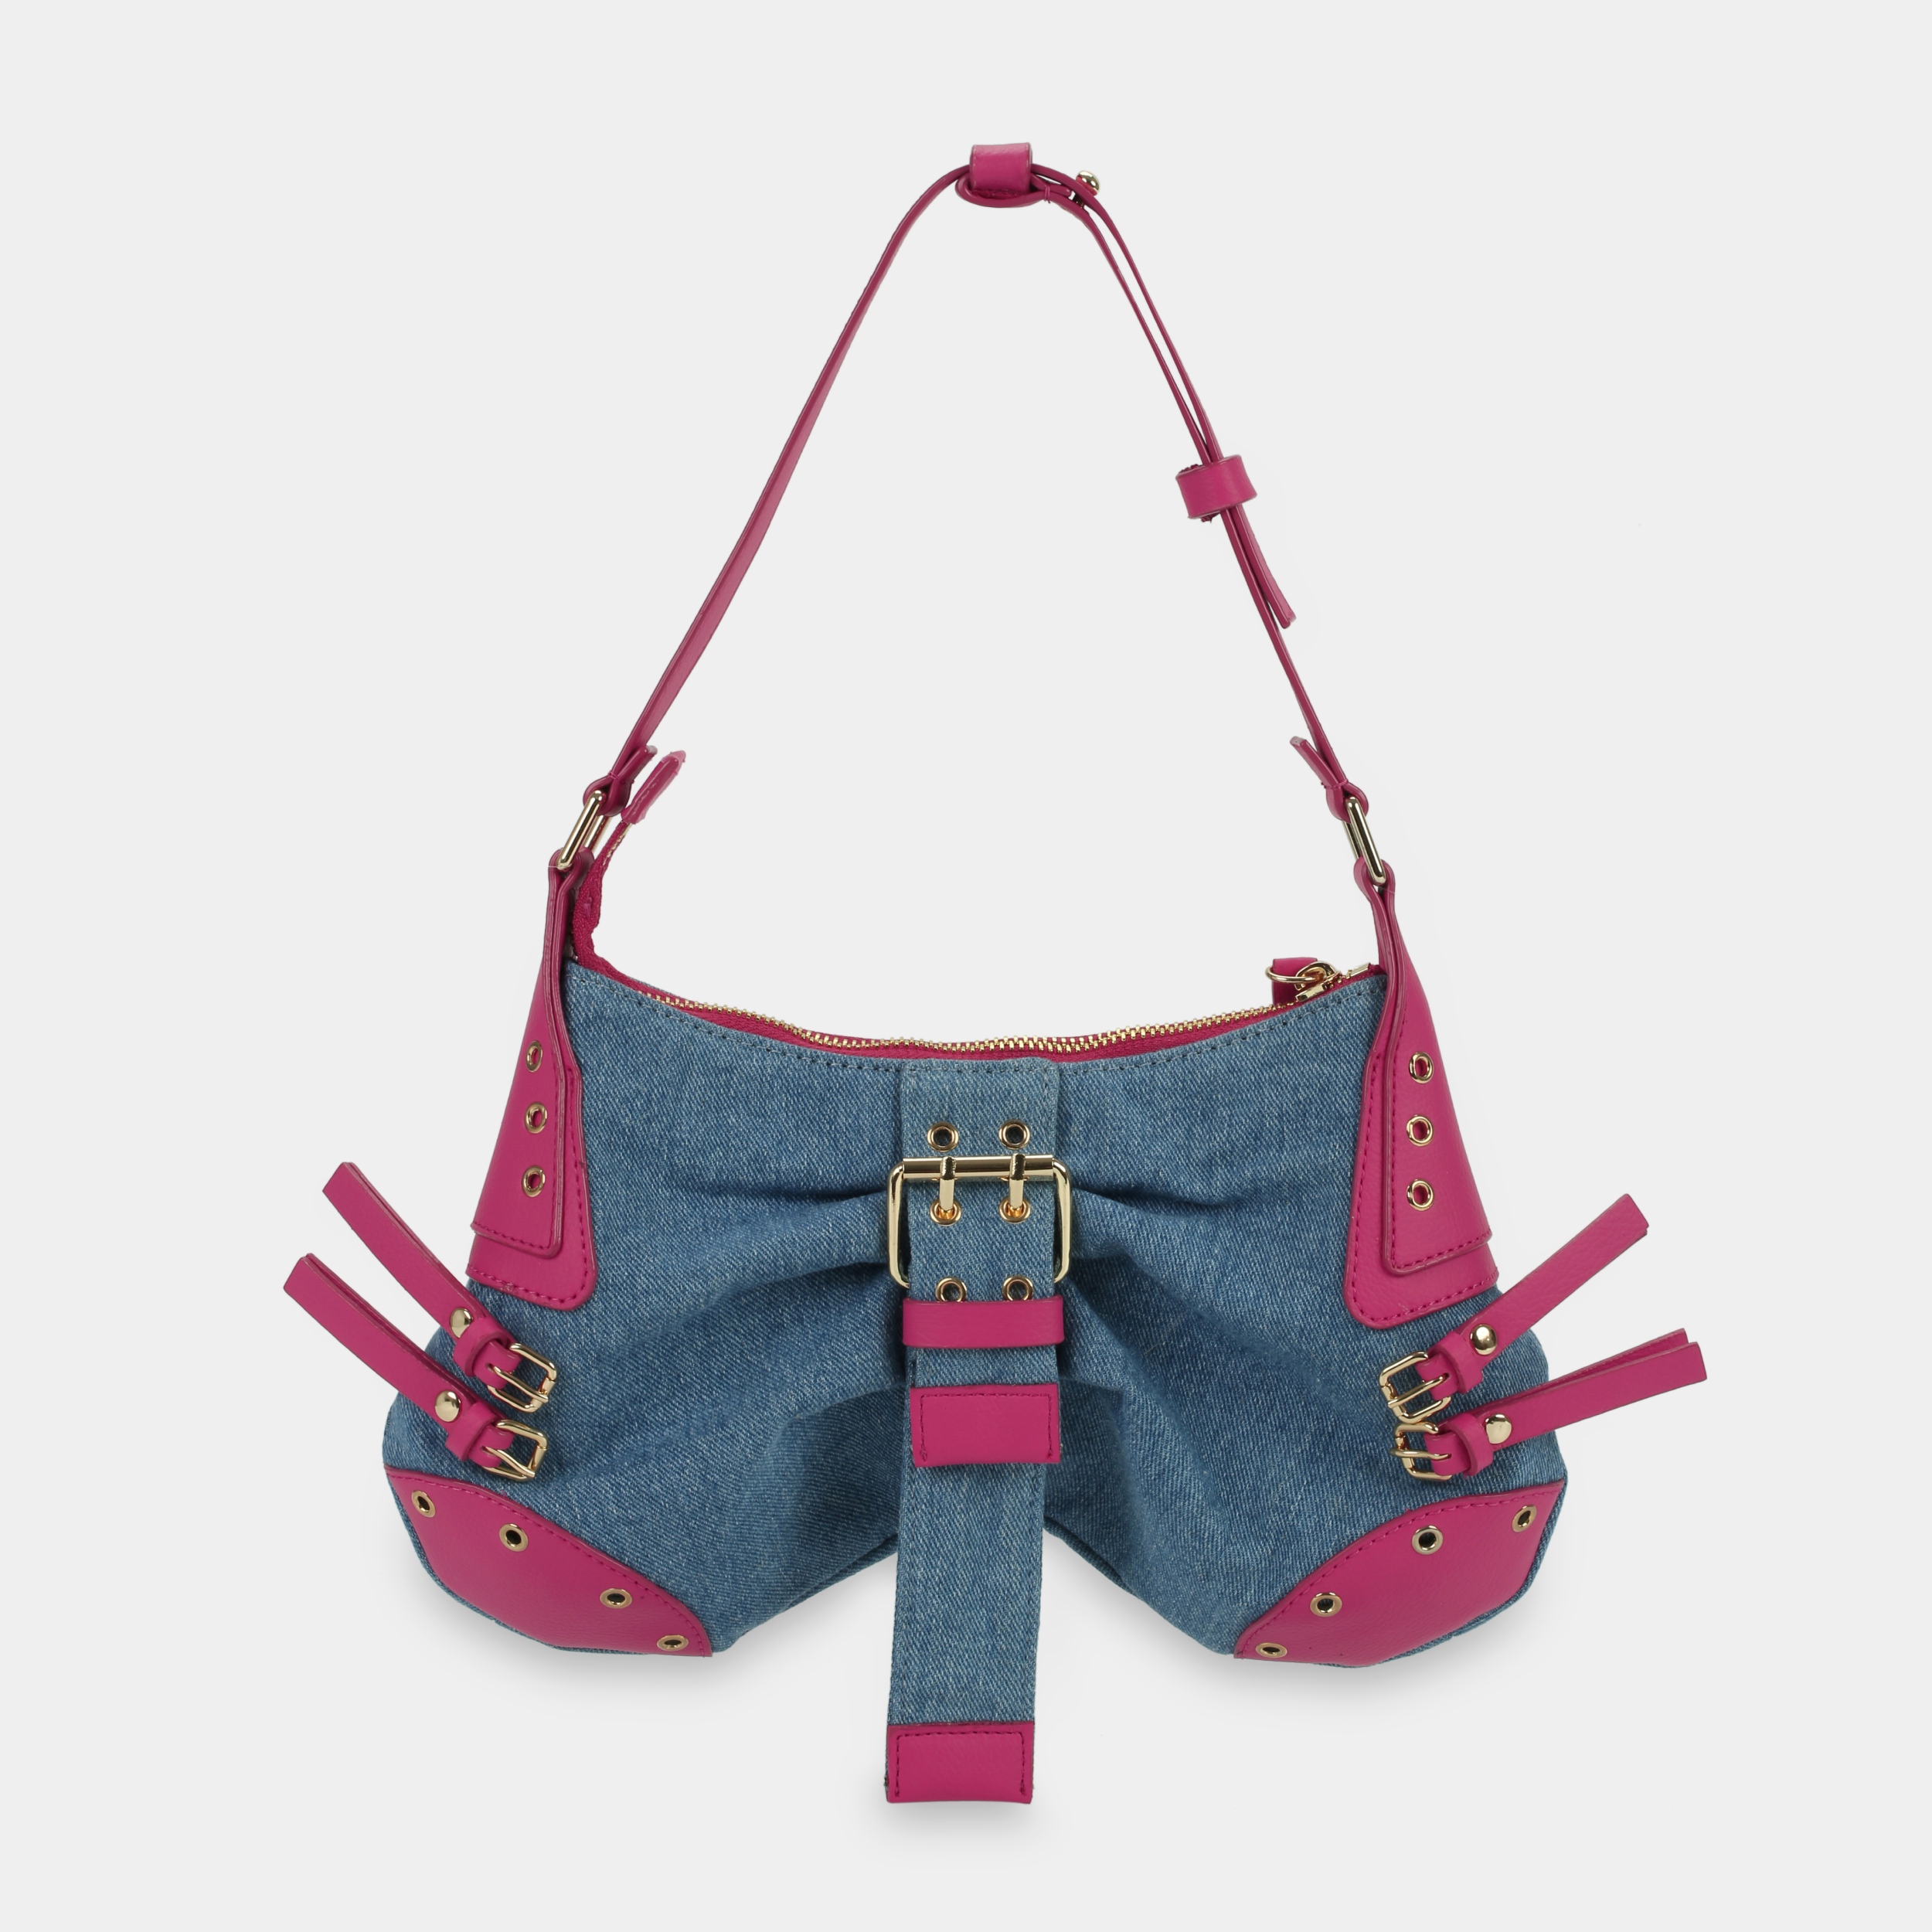 BUTTERFLY Handbag in Denim x Hot Pink